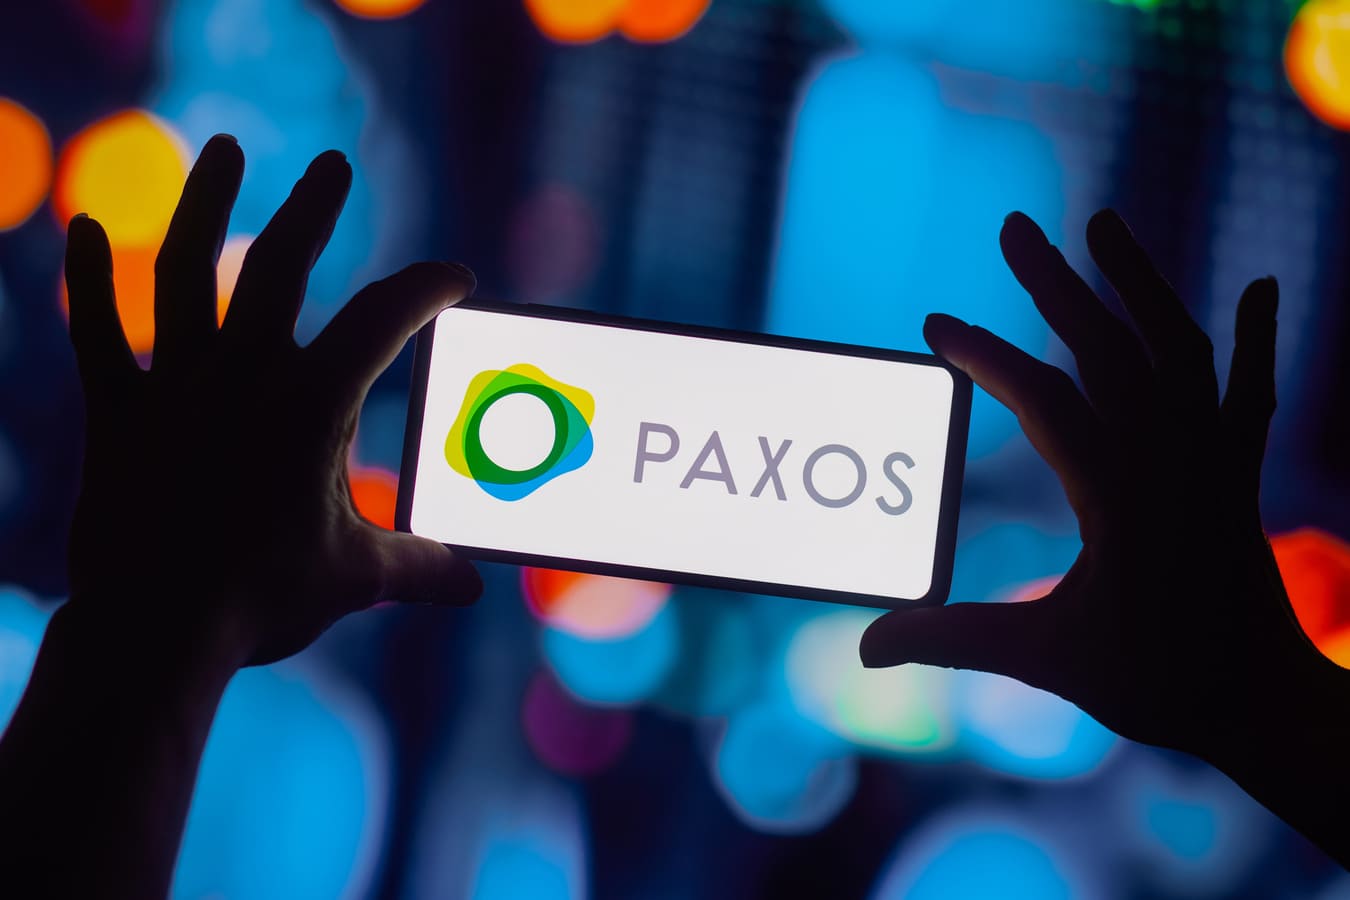 NY Regulator Orders Paxos to Halt Minting New BUSD Tokens